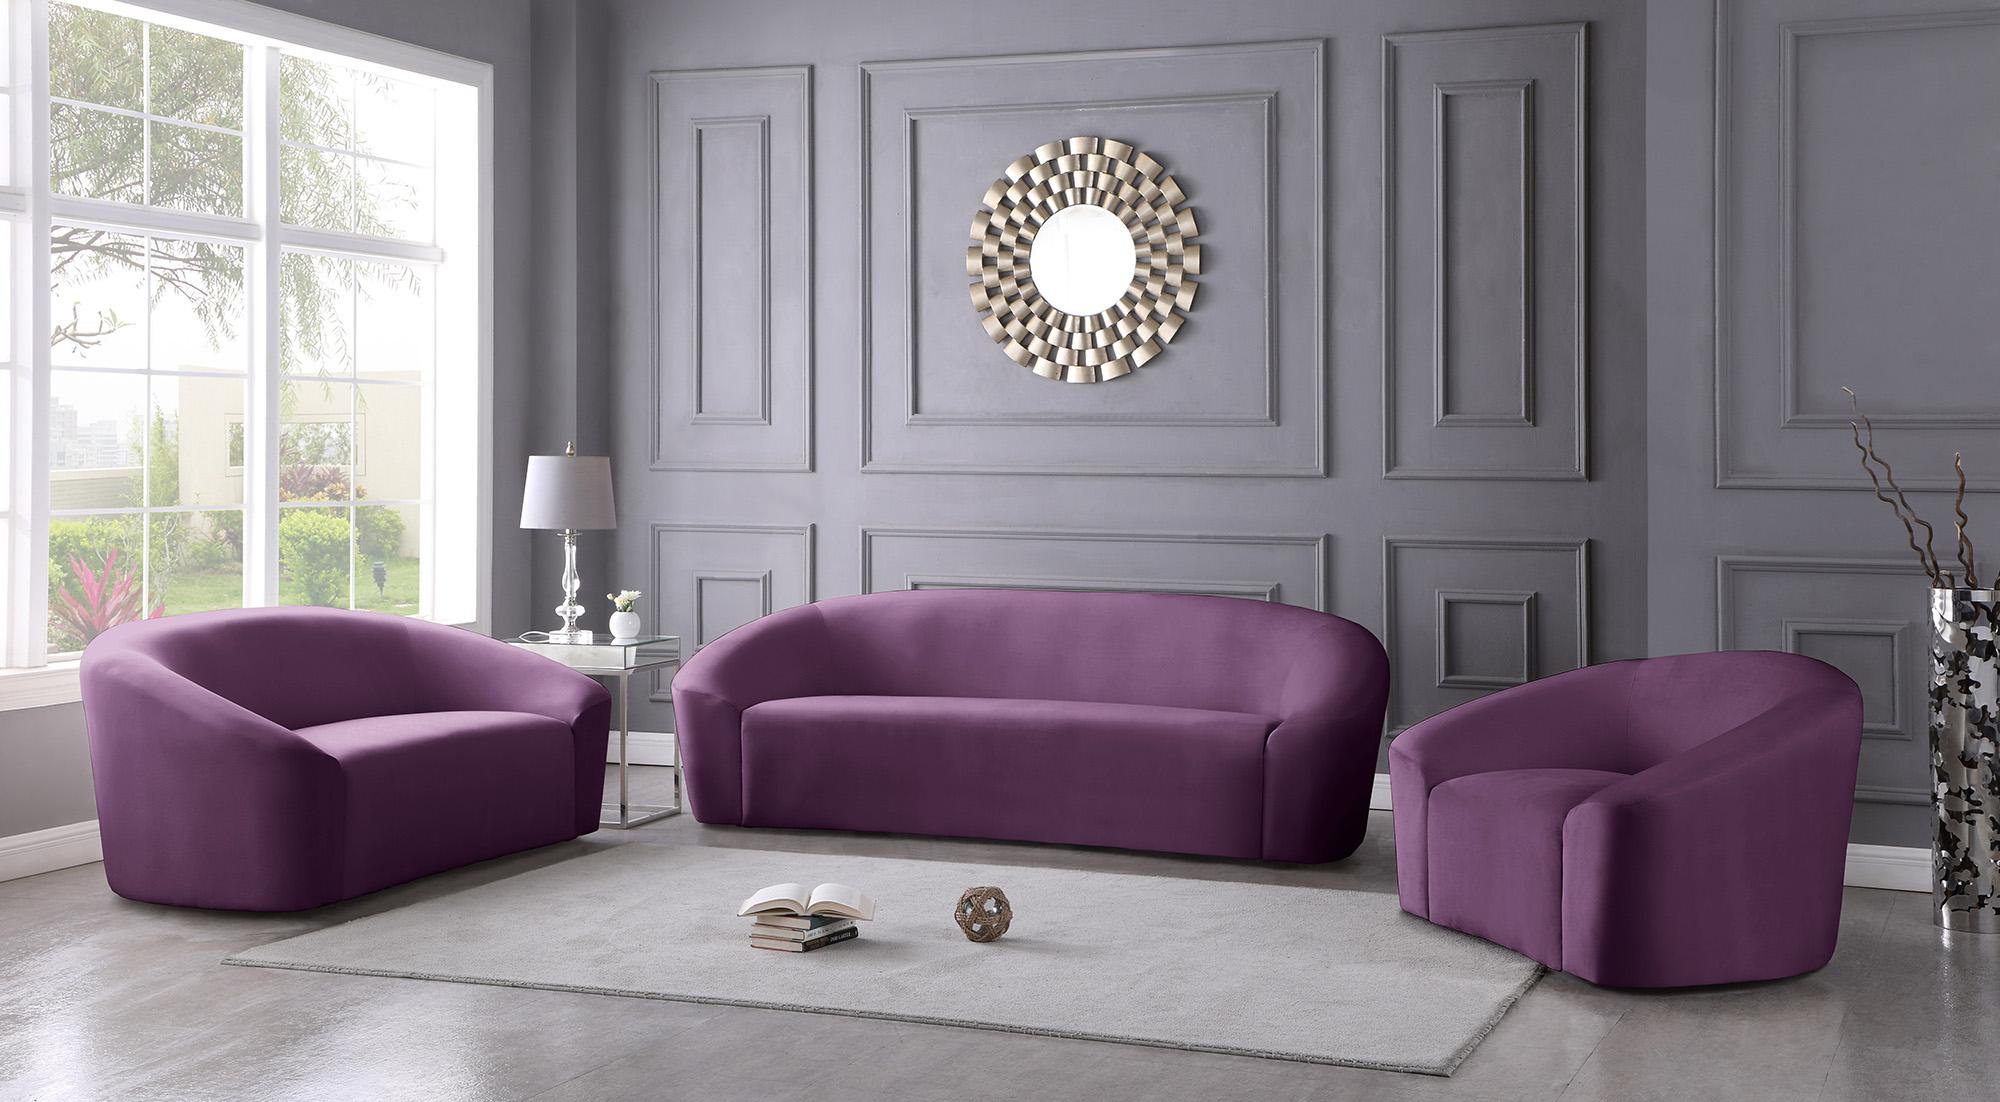 

    
610Purple-C Deep Purple Velvet Chair RILEY 610Purple-C Meridian Modern Contemporary
